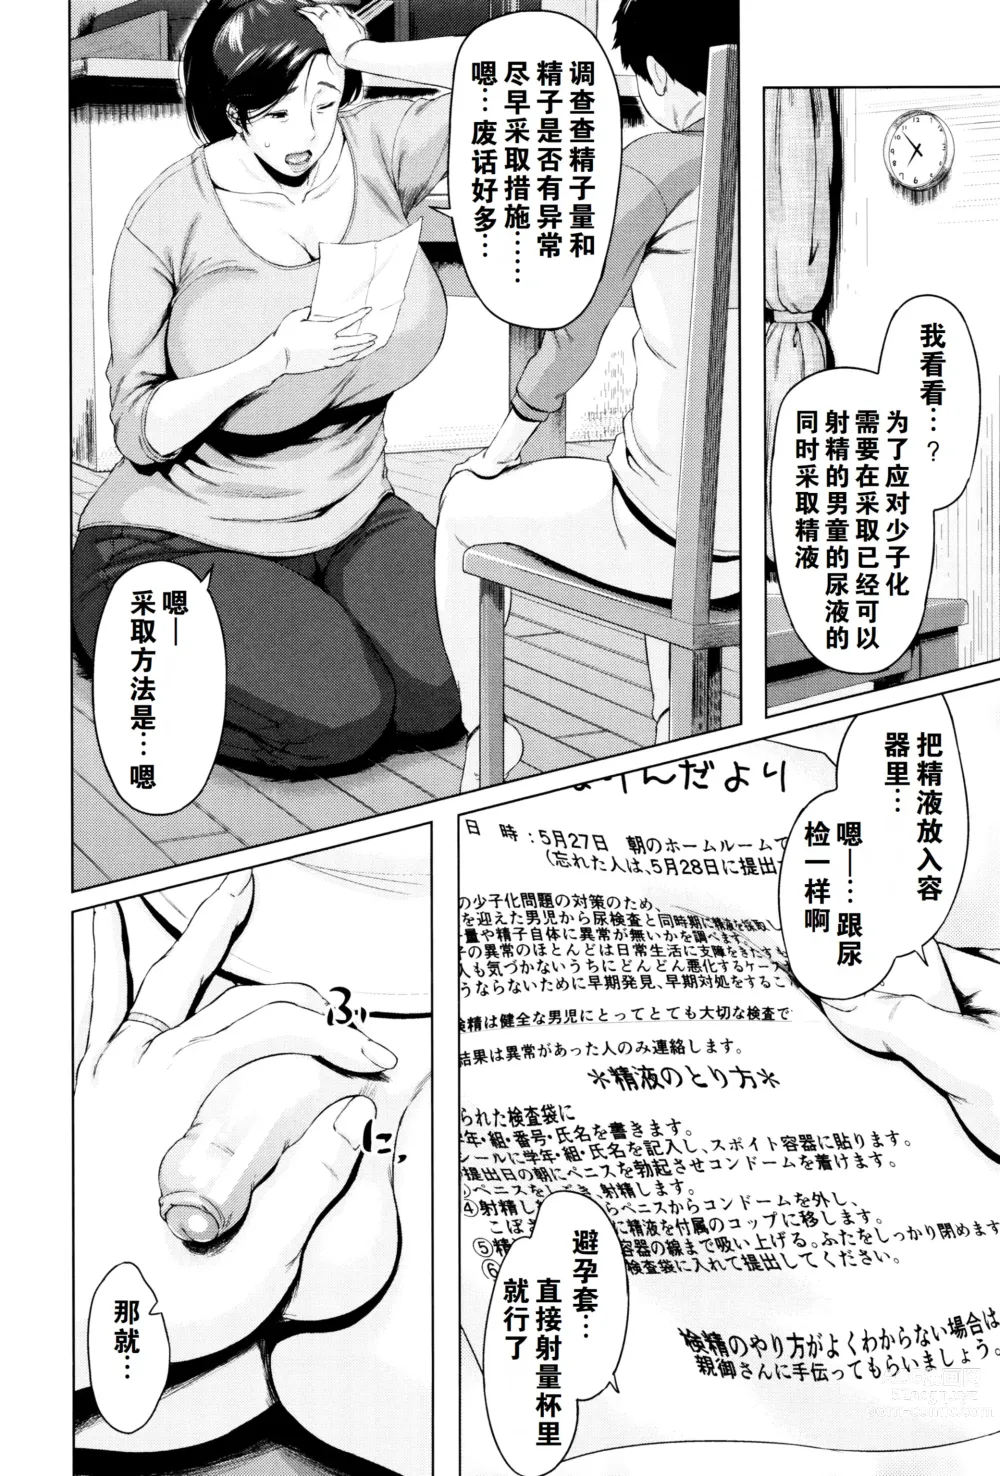 Page 11 of manga Kinyoubi no Haha-tachi e - To Fridays mothers